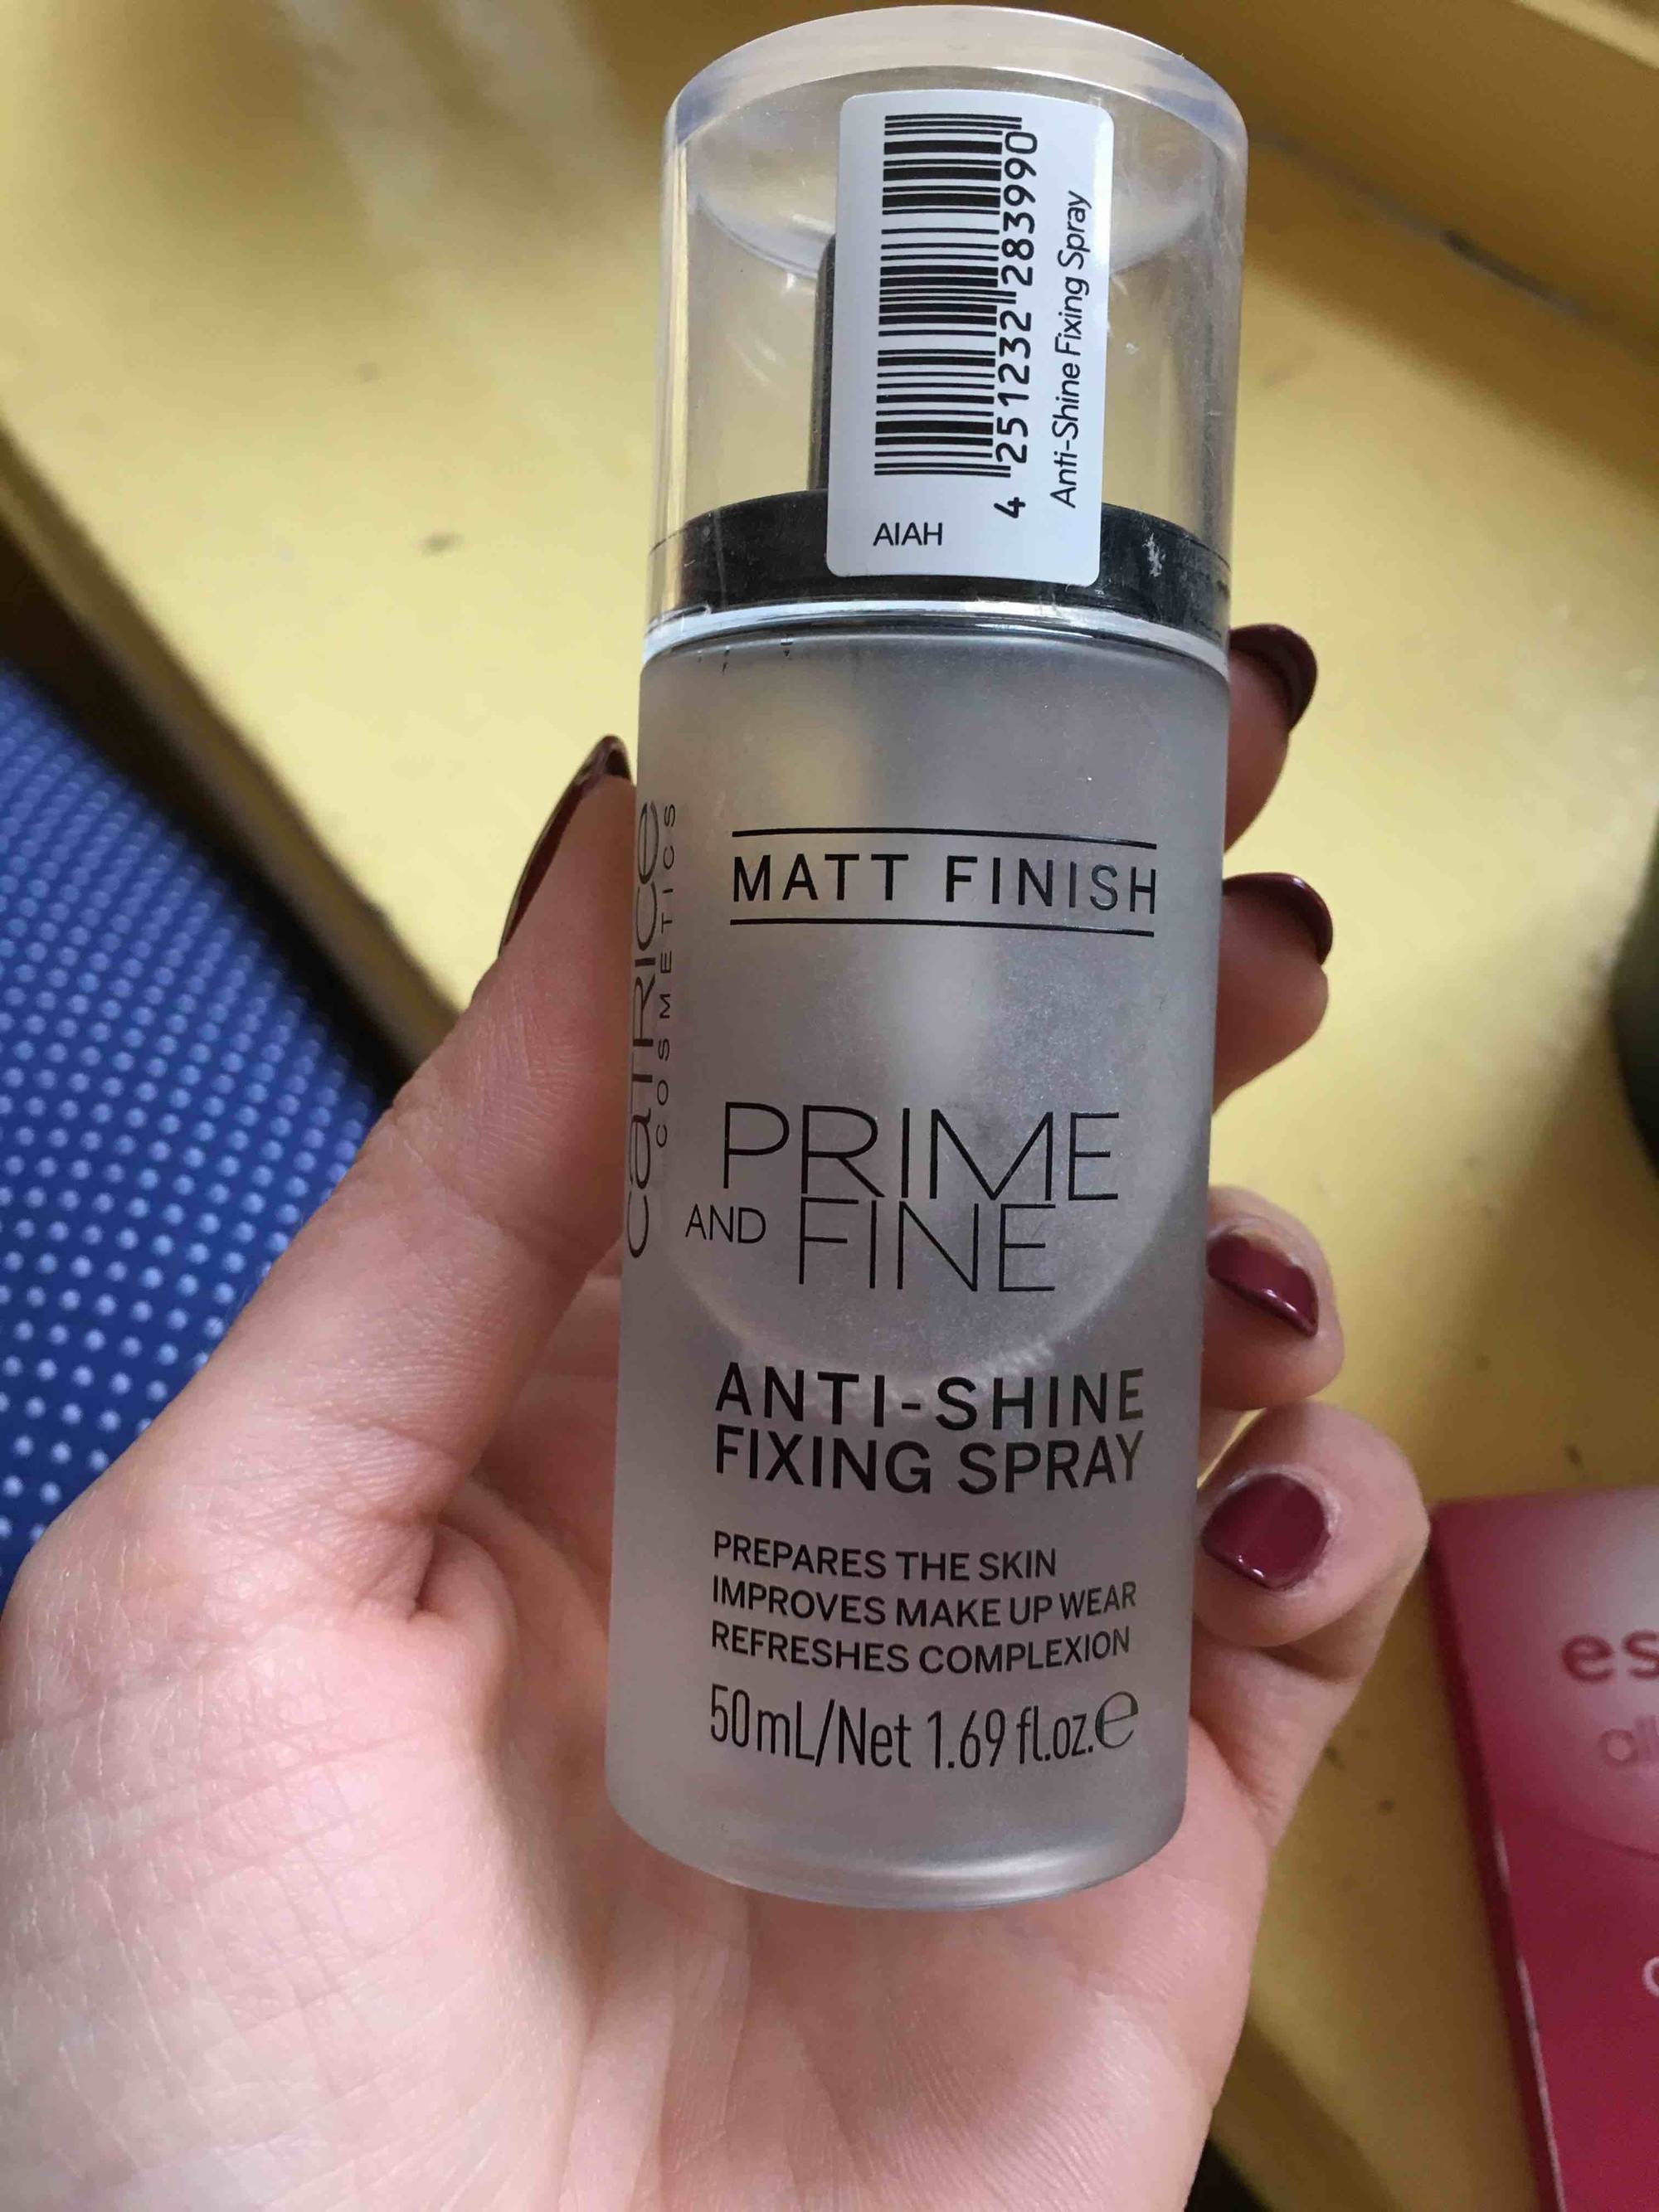 CATRICE - Matt finish prime and fine - Anti-shine fixing spray